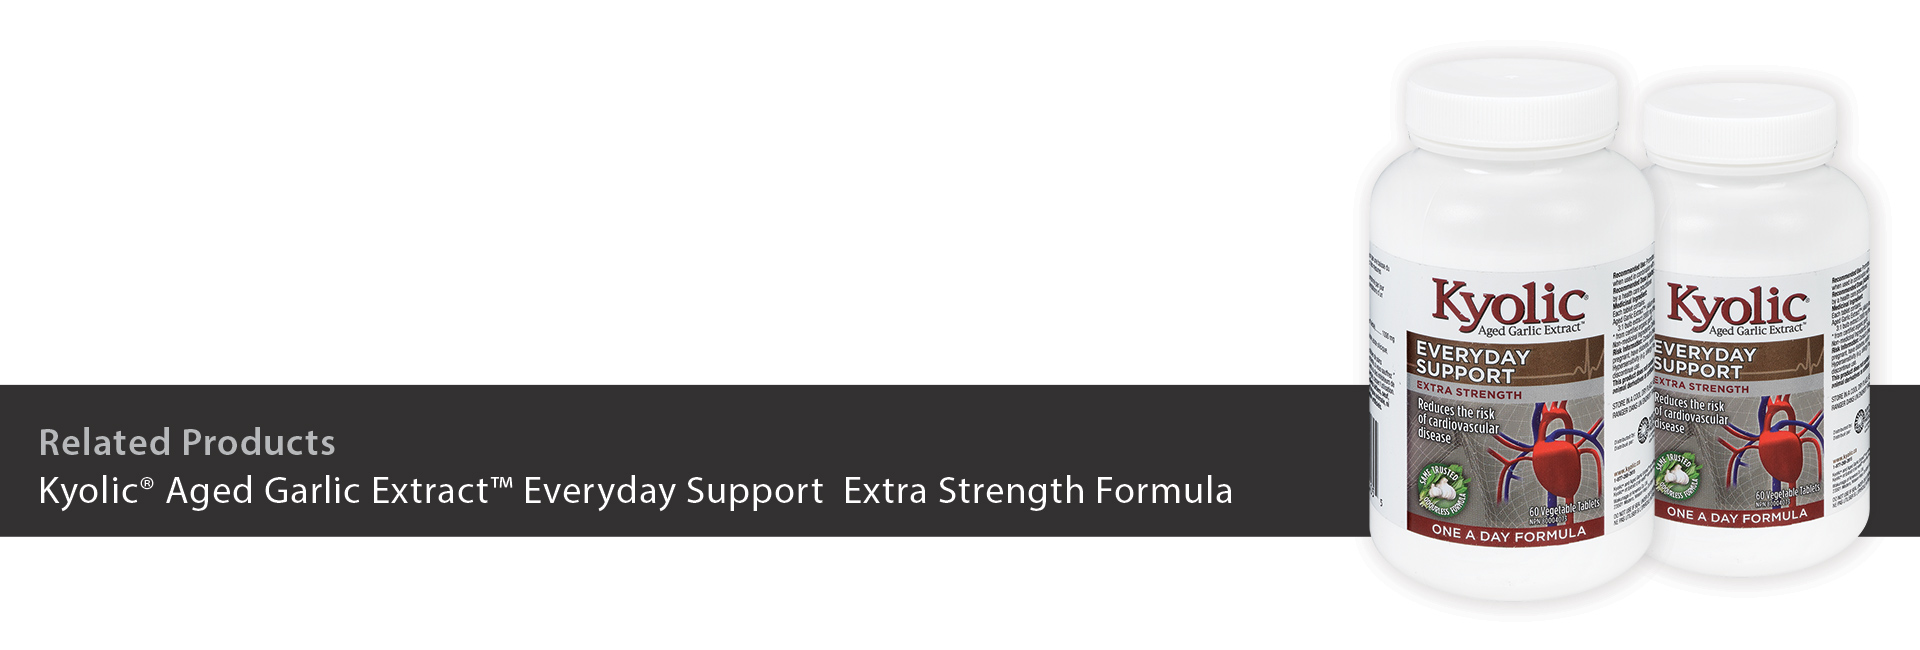 Kyolic Aged Garlic Extract™ Everyday Support Extra Strength Formula